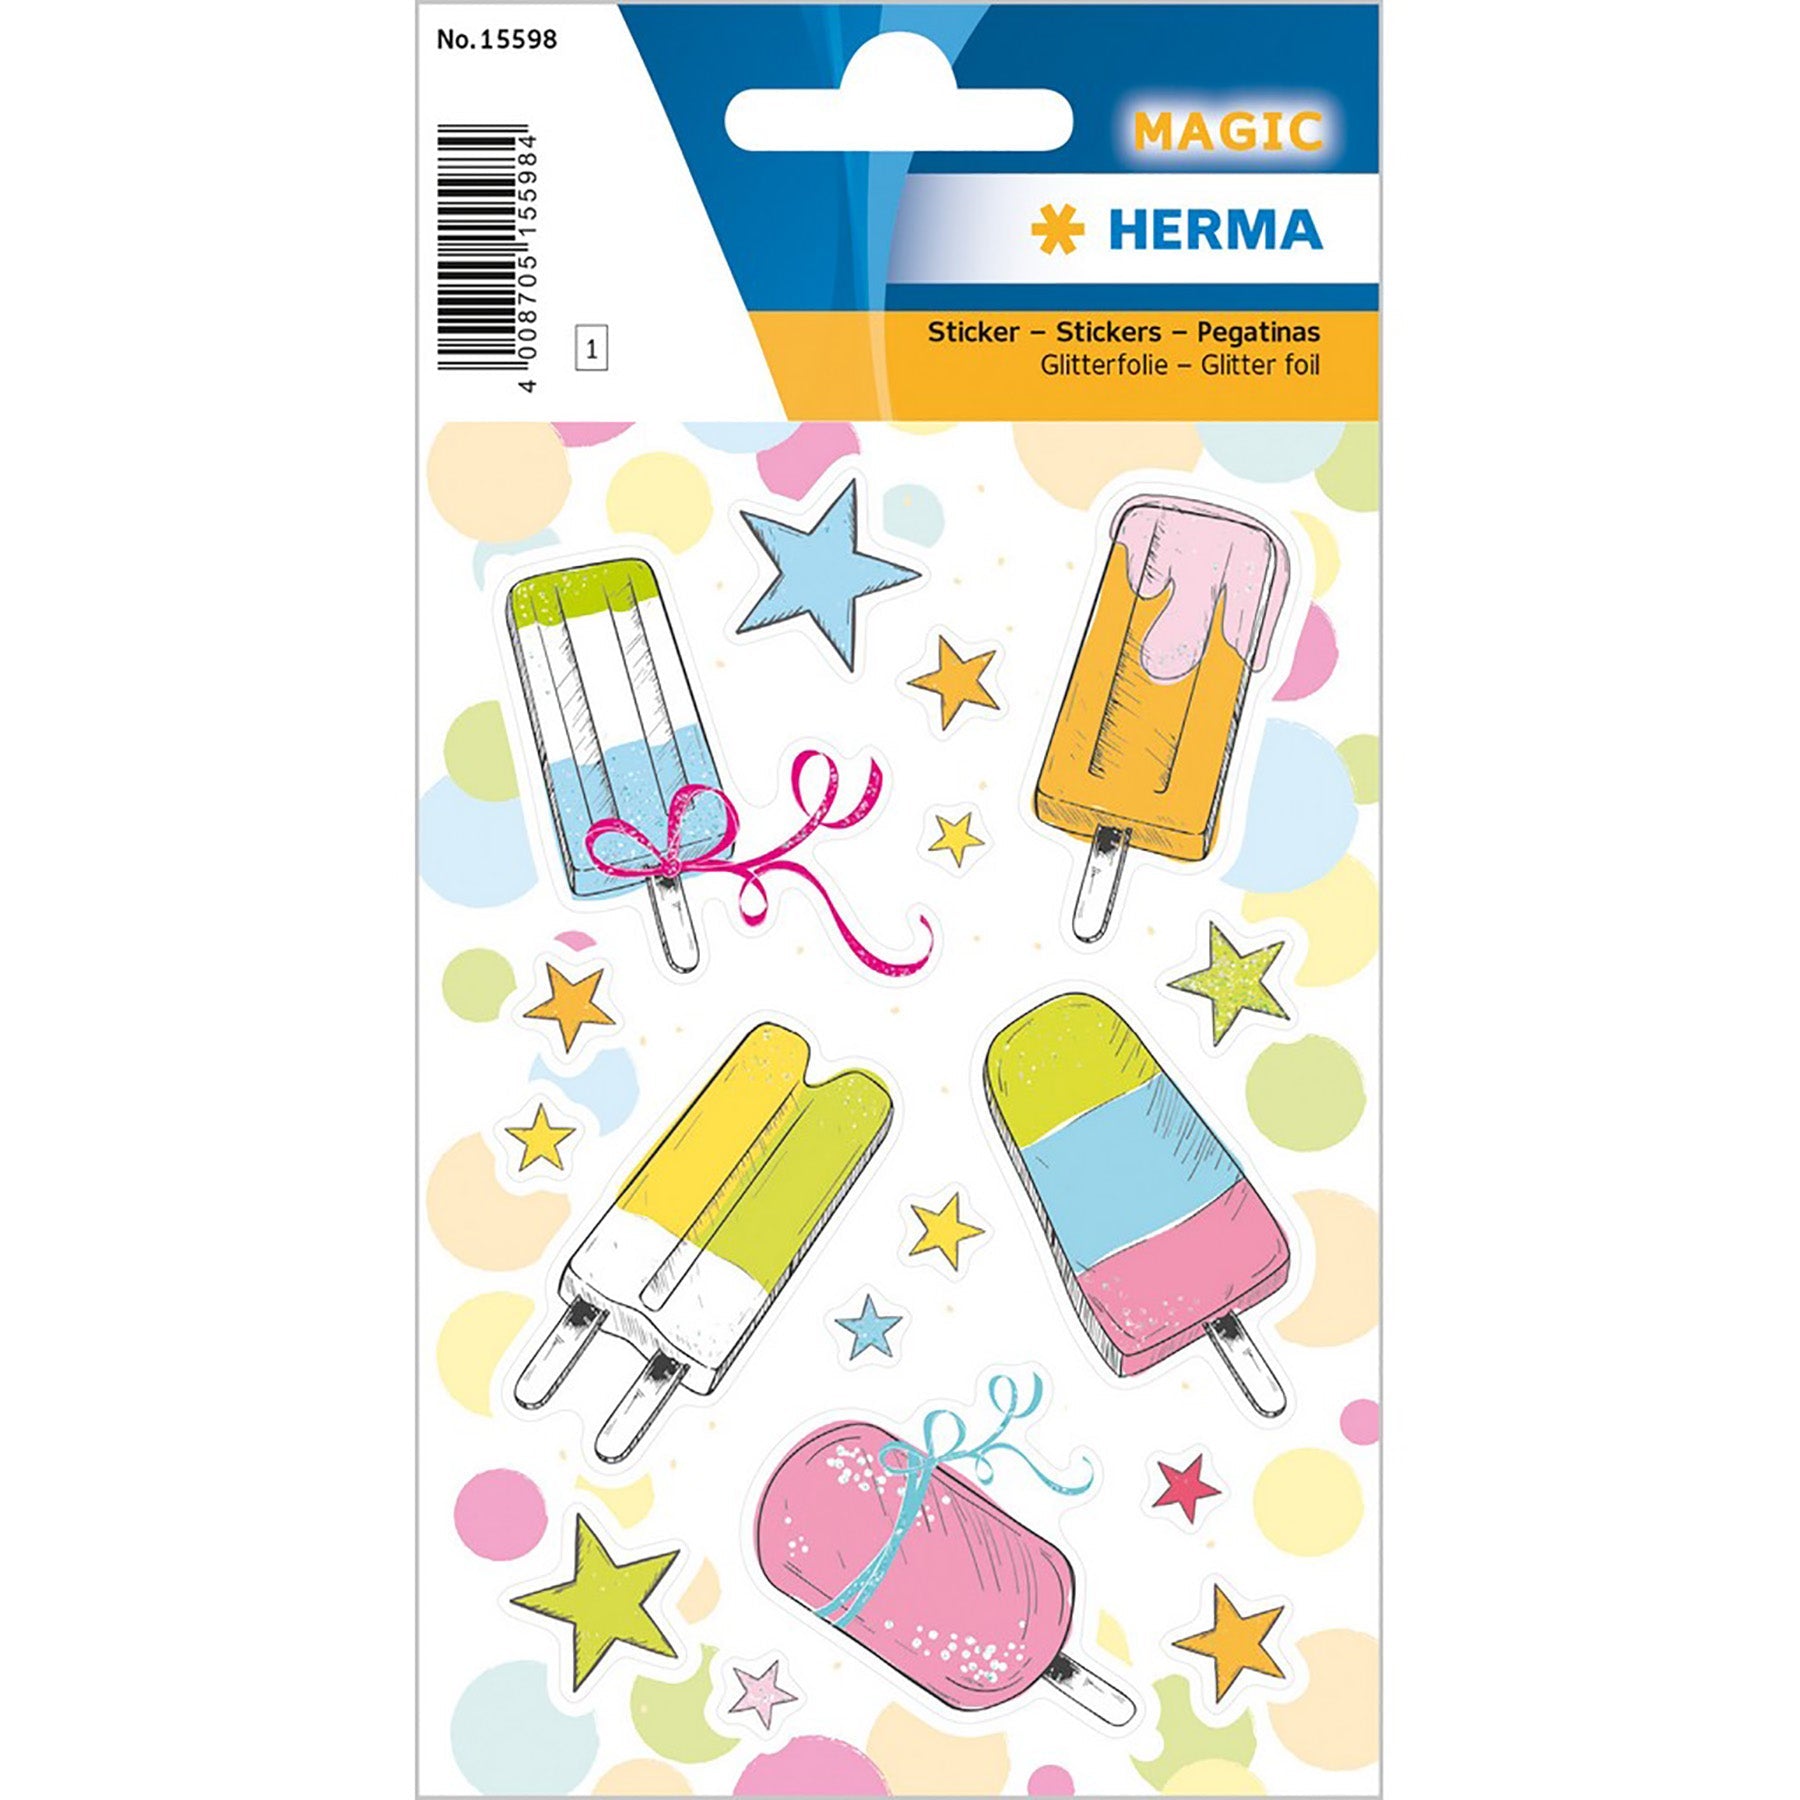 Herma Magic Stickers Popsicle Glitter Foil 4.75x3.1in Sheet